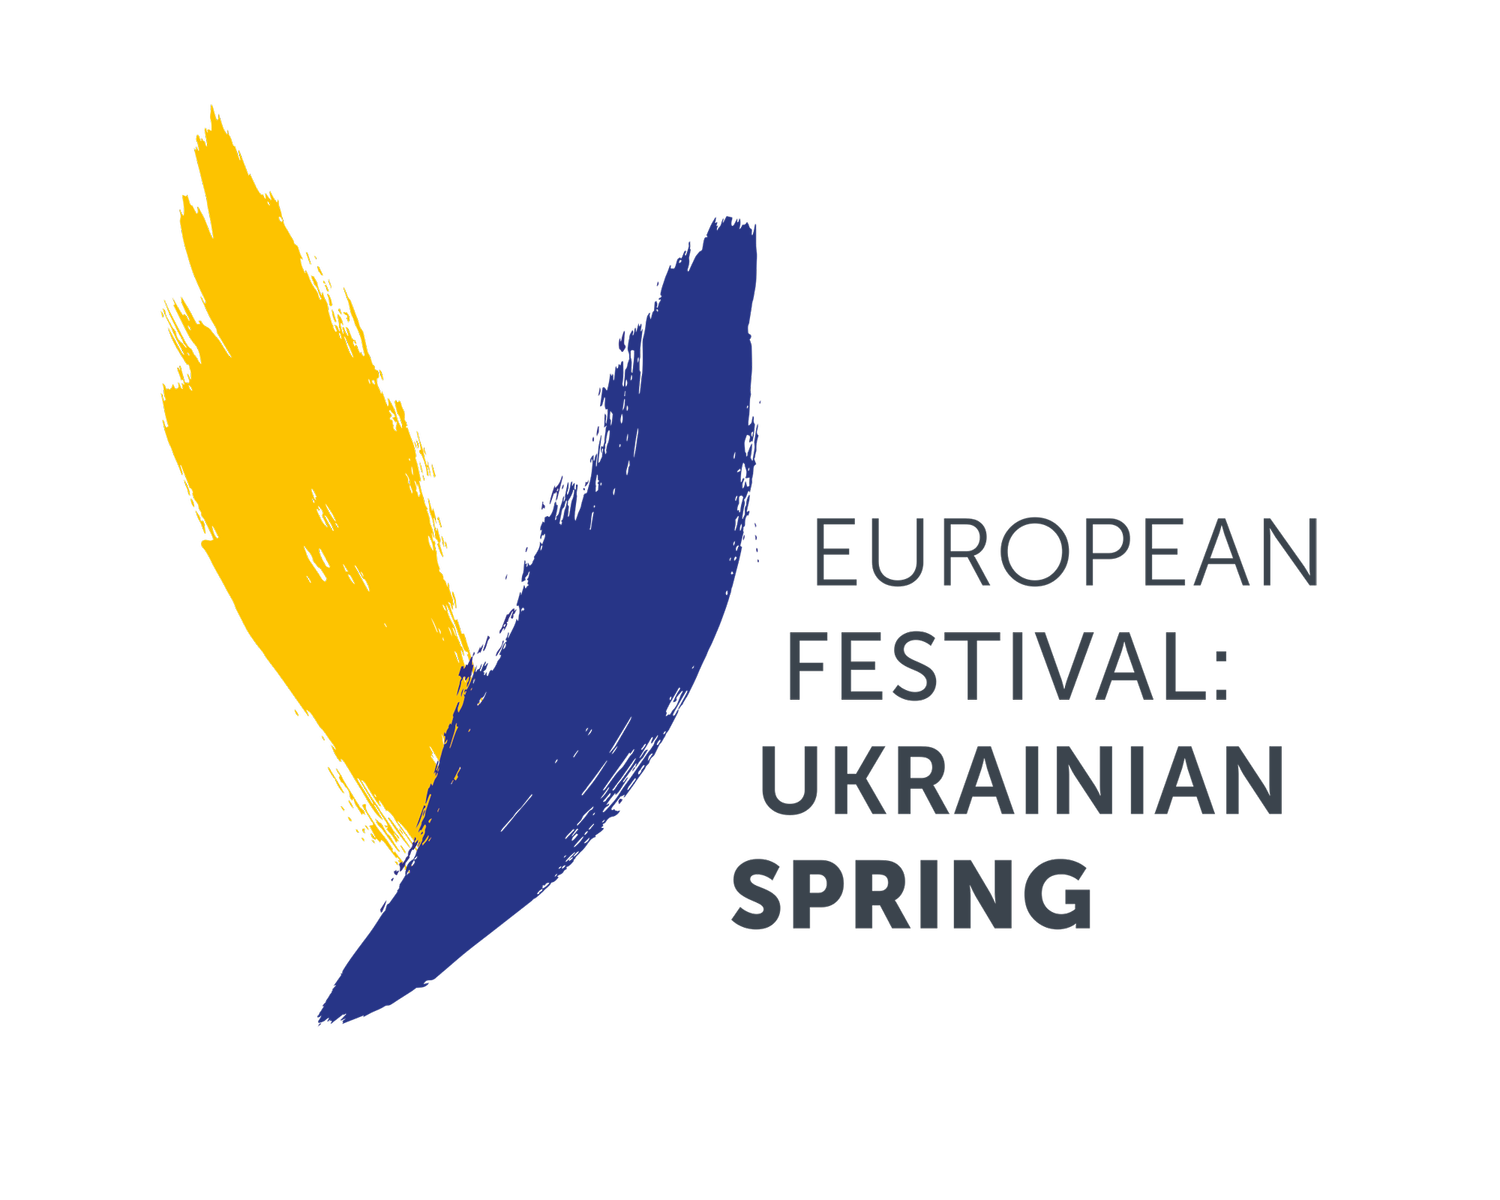 European Festival: Ukrainian Spring